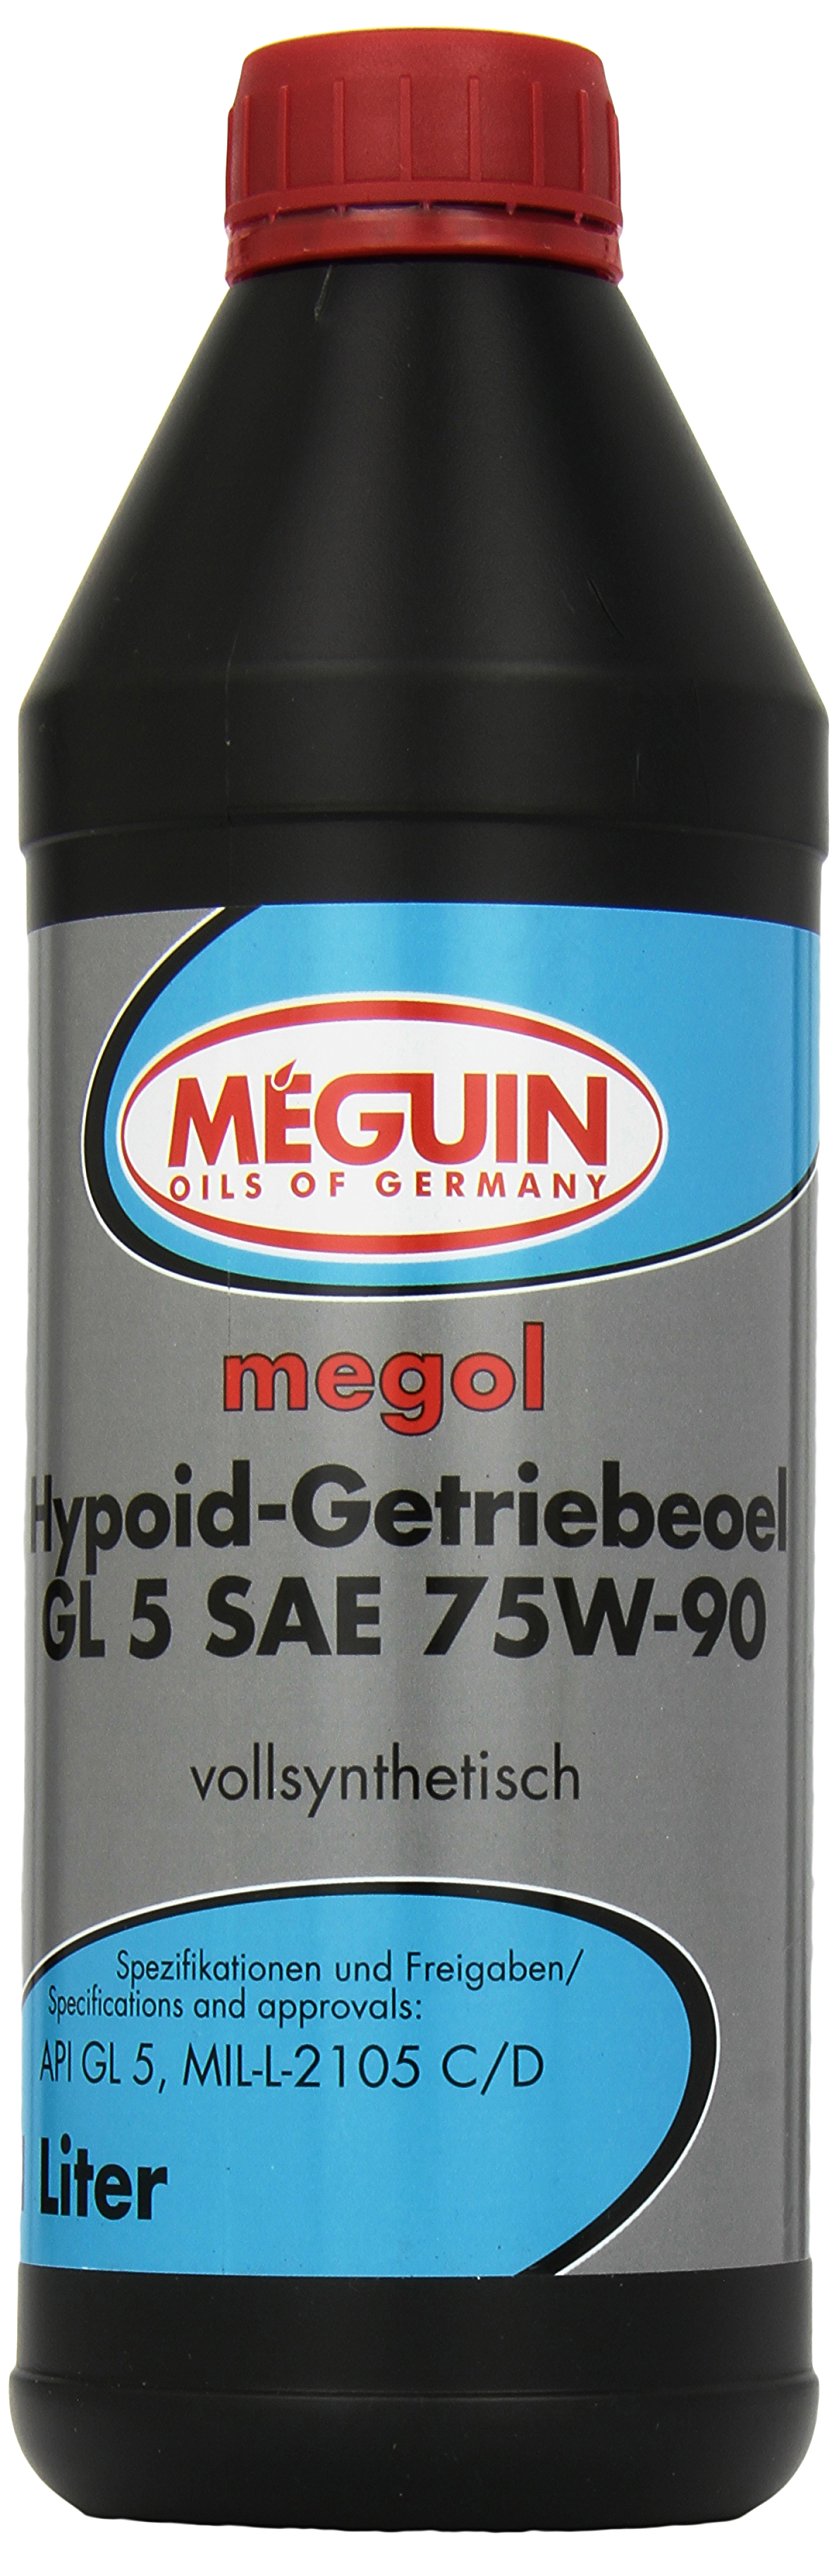 Meguin 4650 Megol Getrieböl GL 5 SAE 75W-90, 1 L von Meguin